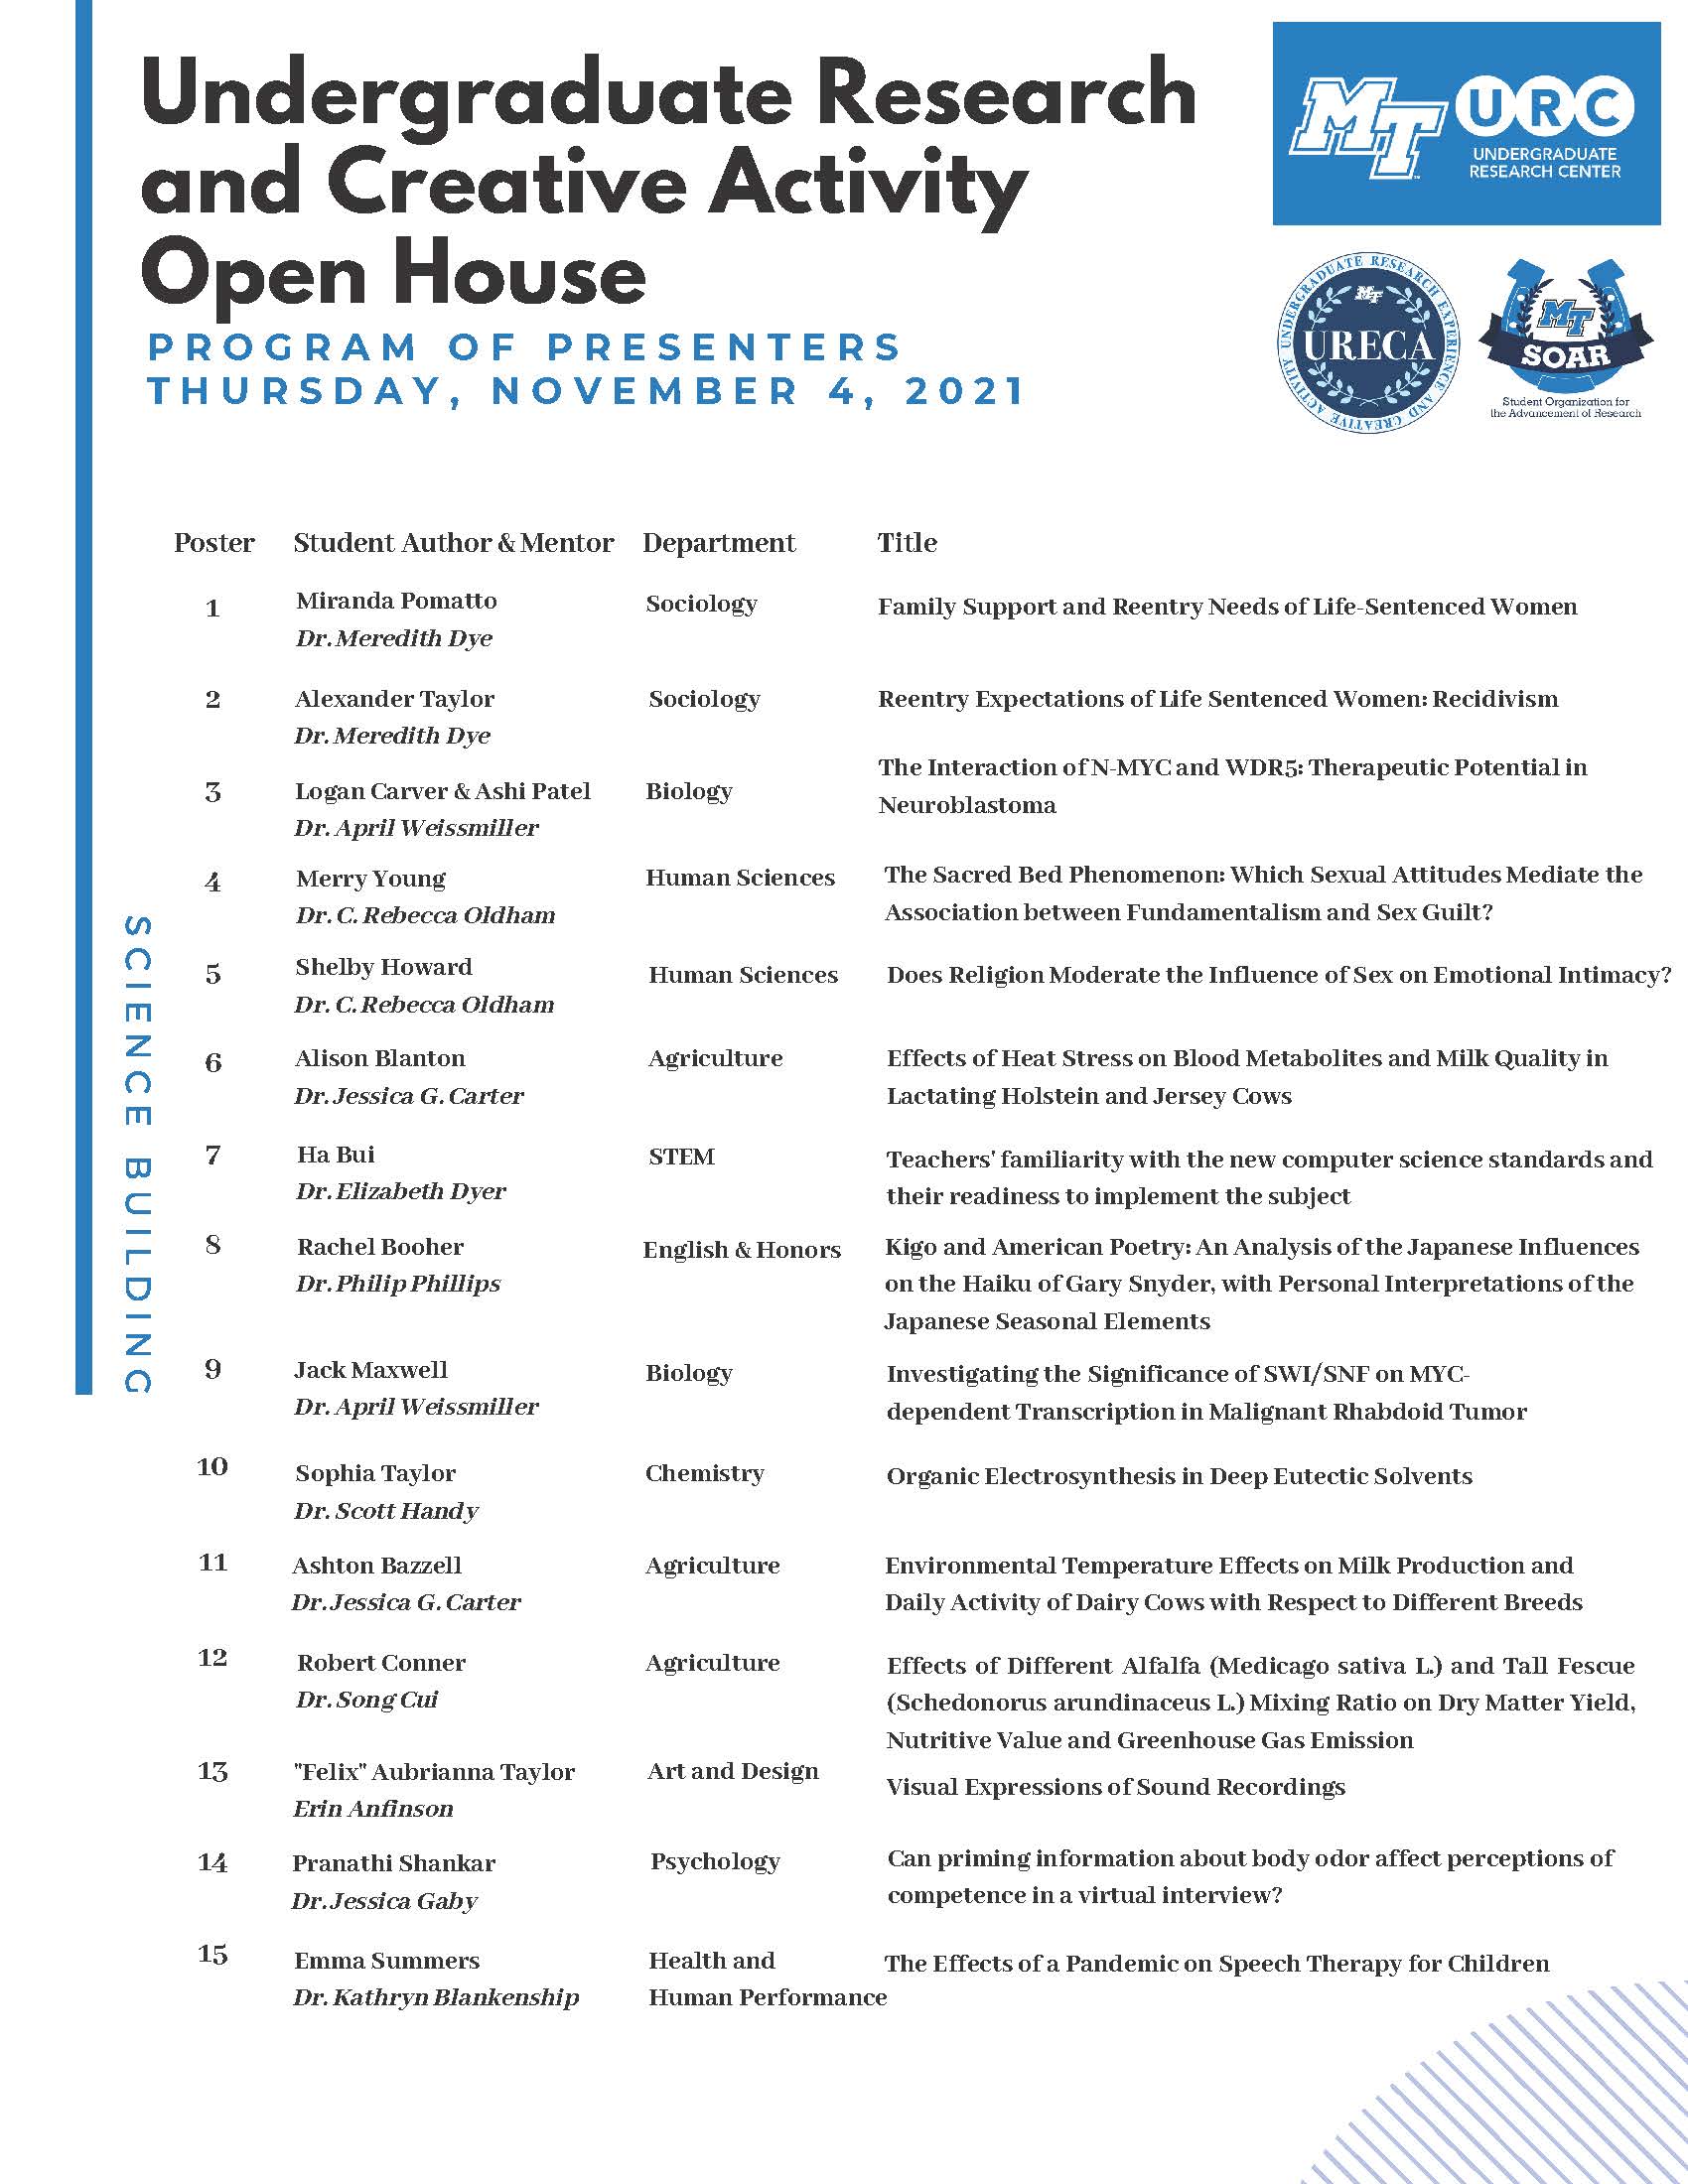 2021 URC Open House Program